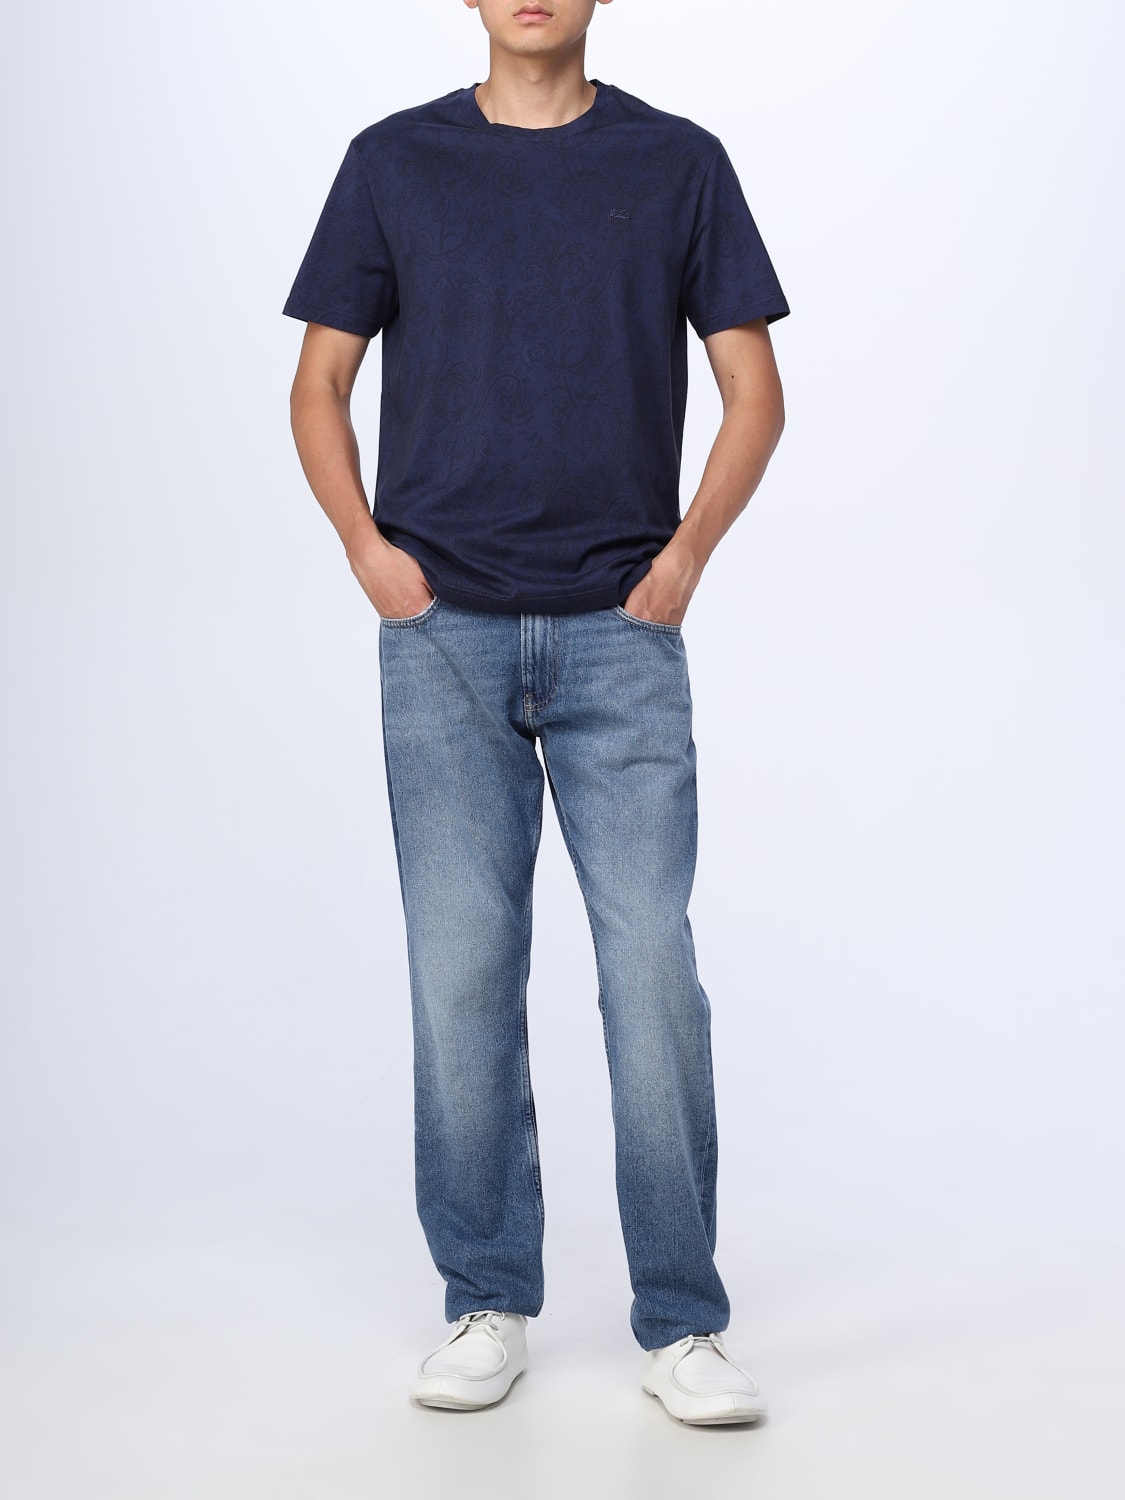 ETRO: cotton t-shirt - Blue | Etro t-shirt 1Y0209609 online at GIGLIO.COM